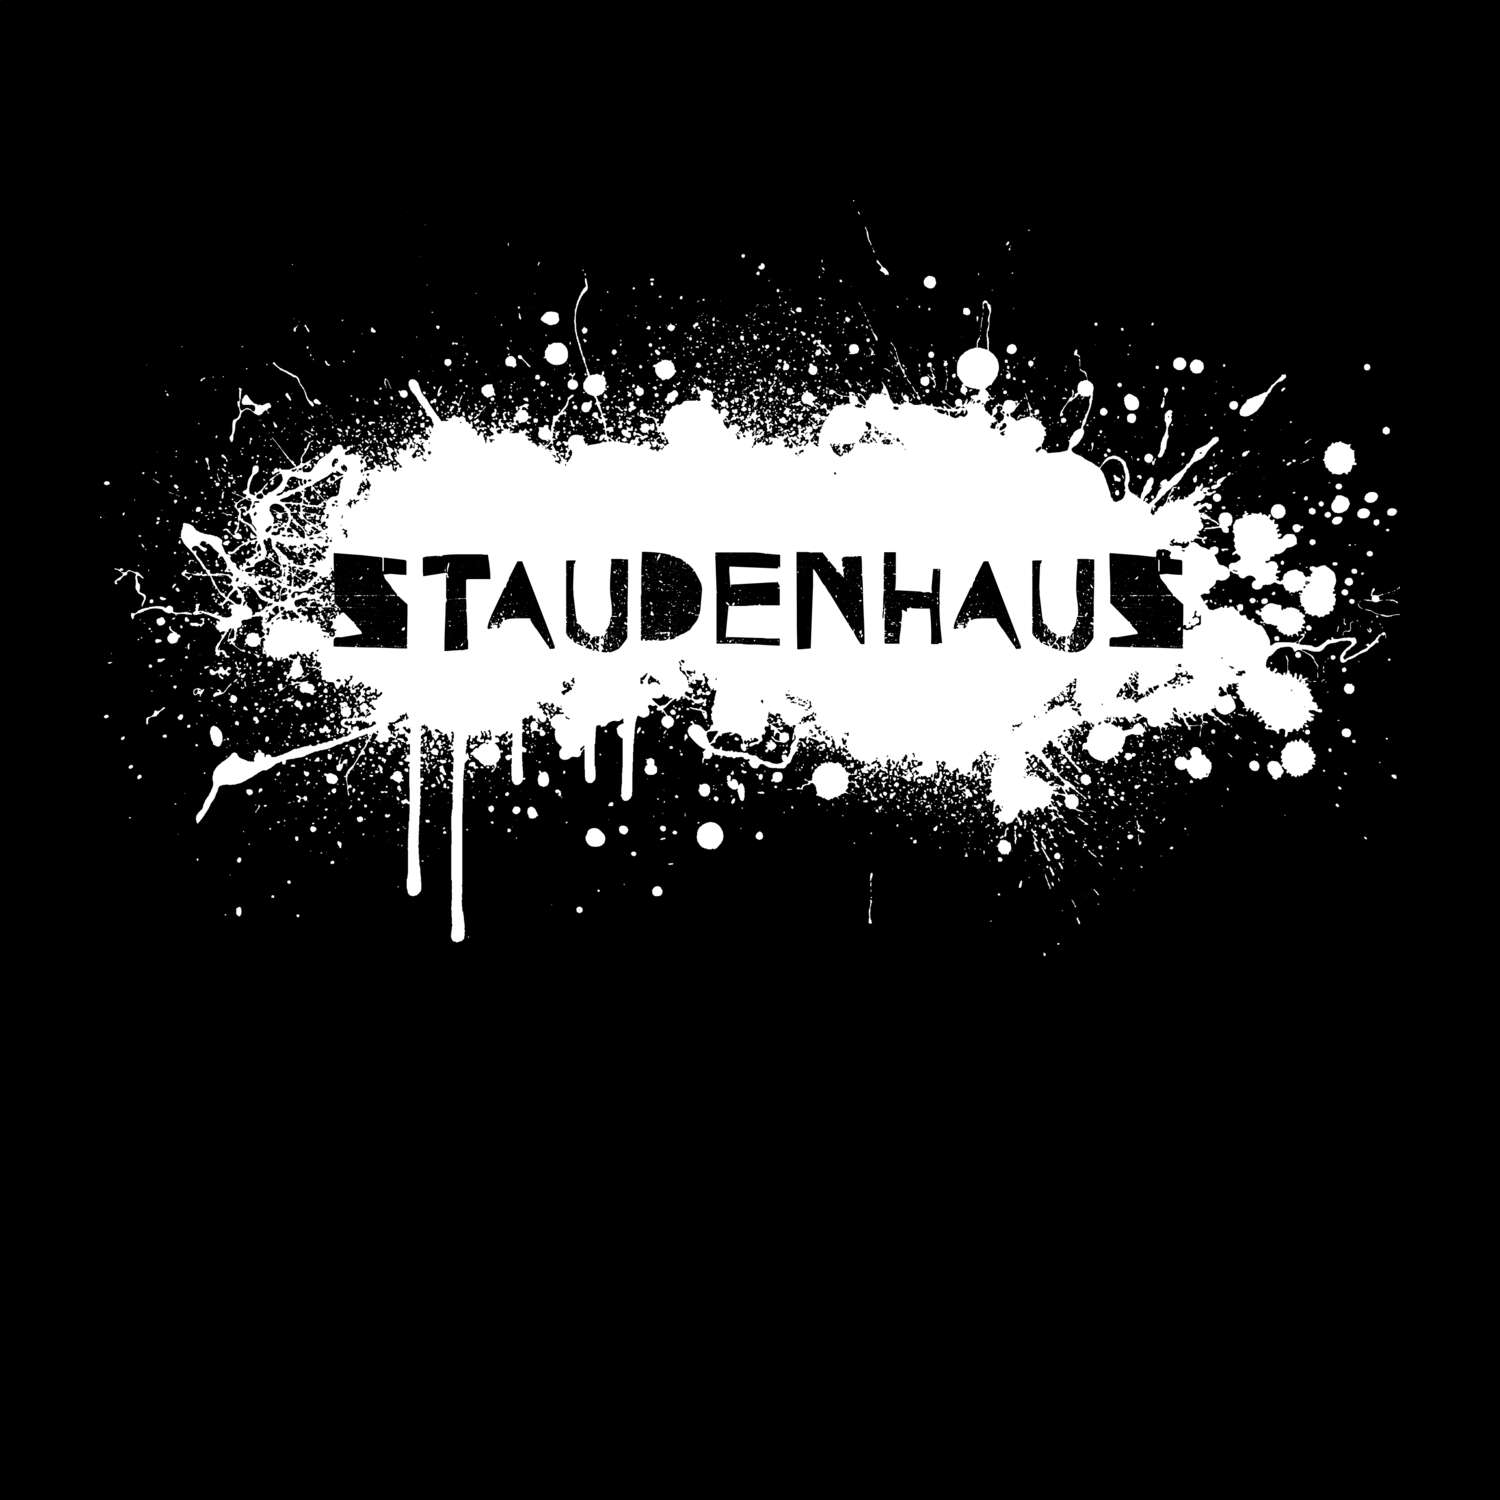 Staudenhaus T-Shirt »Paint Splash Punk«